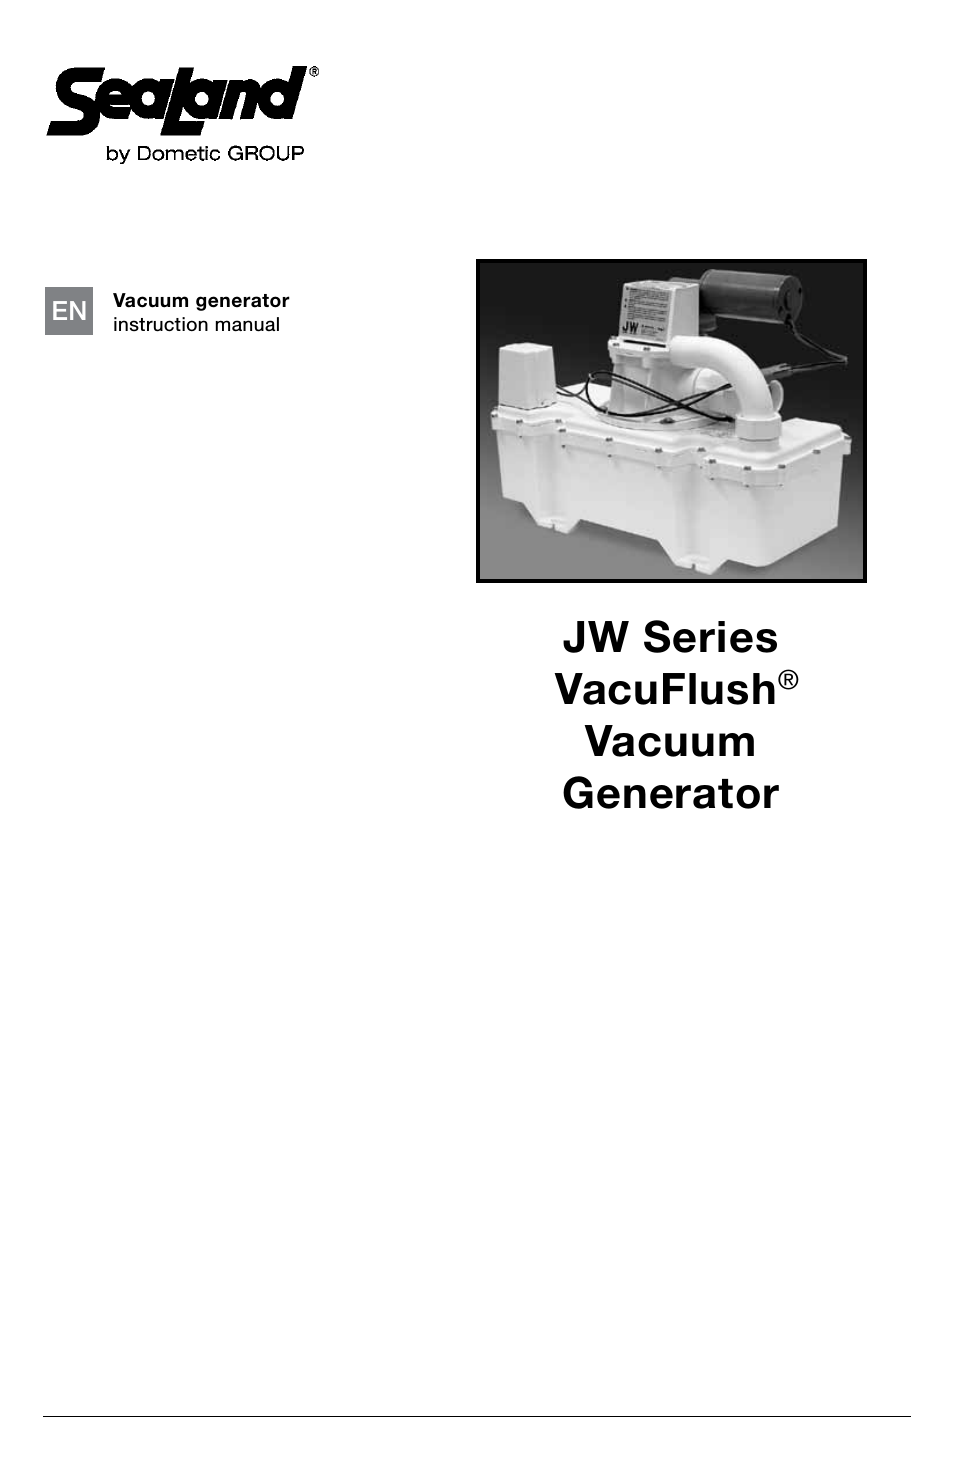 JW Series VacuFlush Vacuum Generator